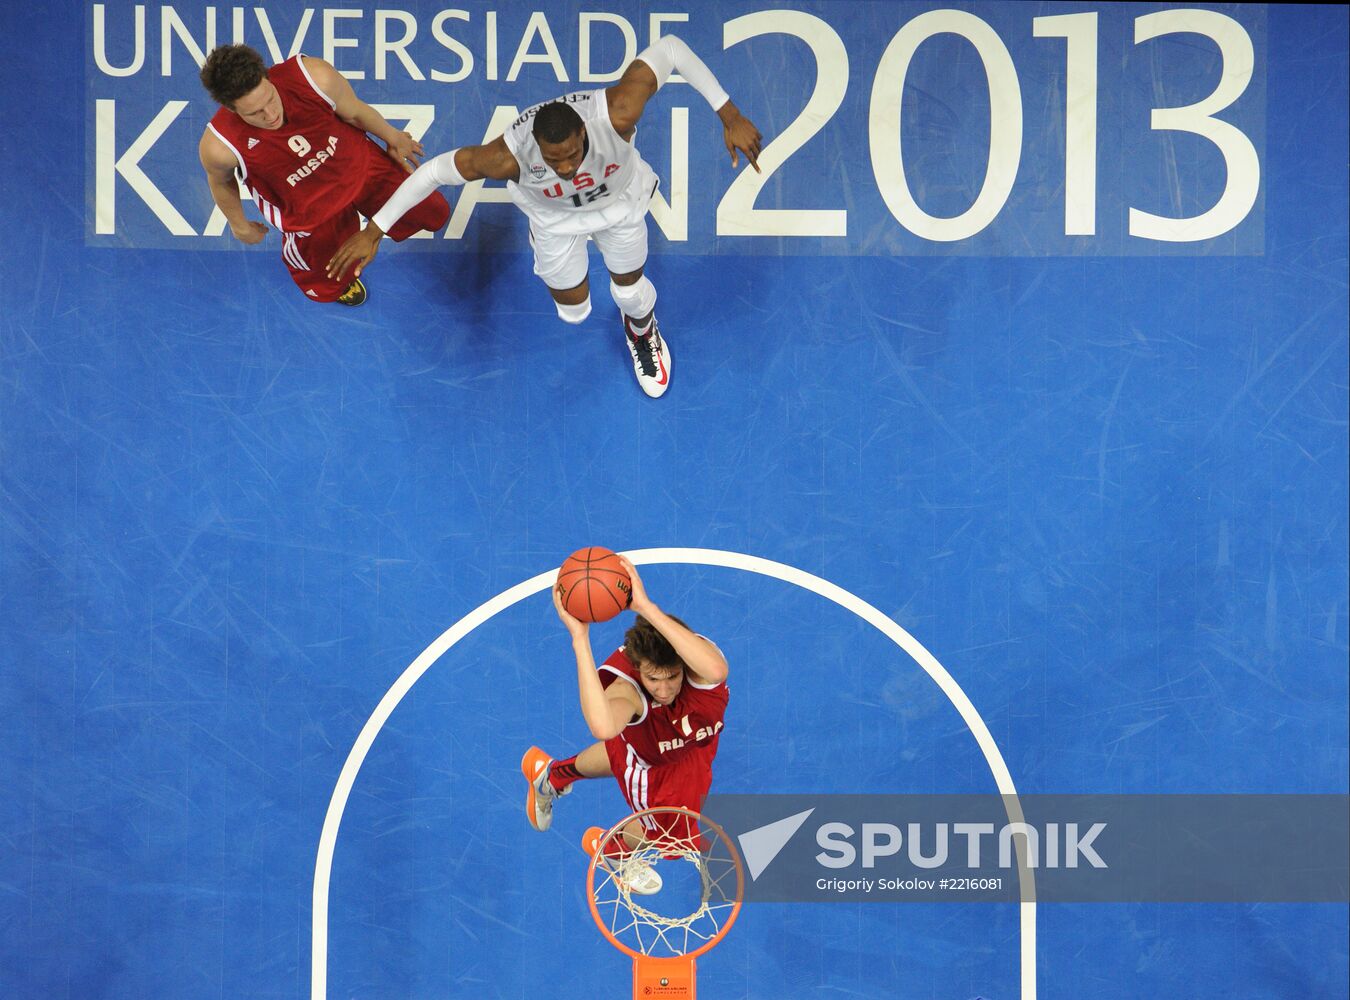 Universiade. Basketball. Men. Friendly match of Russian team